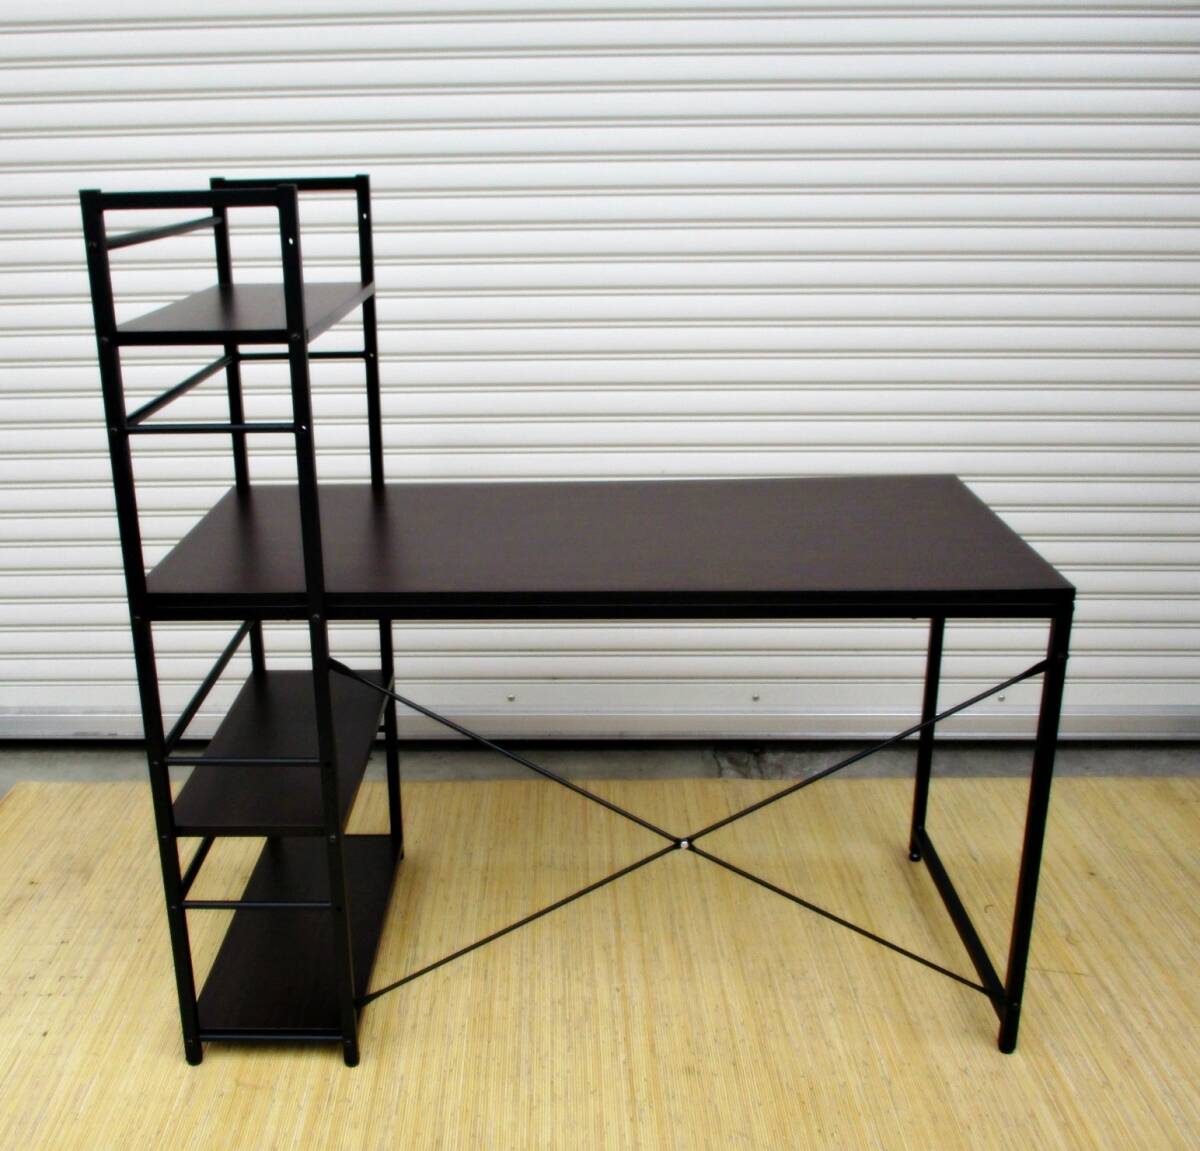  Sanwa Supply rack attaching slim desk 100-DESKH022 width 120. wood grain storage attaching computer desk Work compact Sanwa Direct 